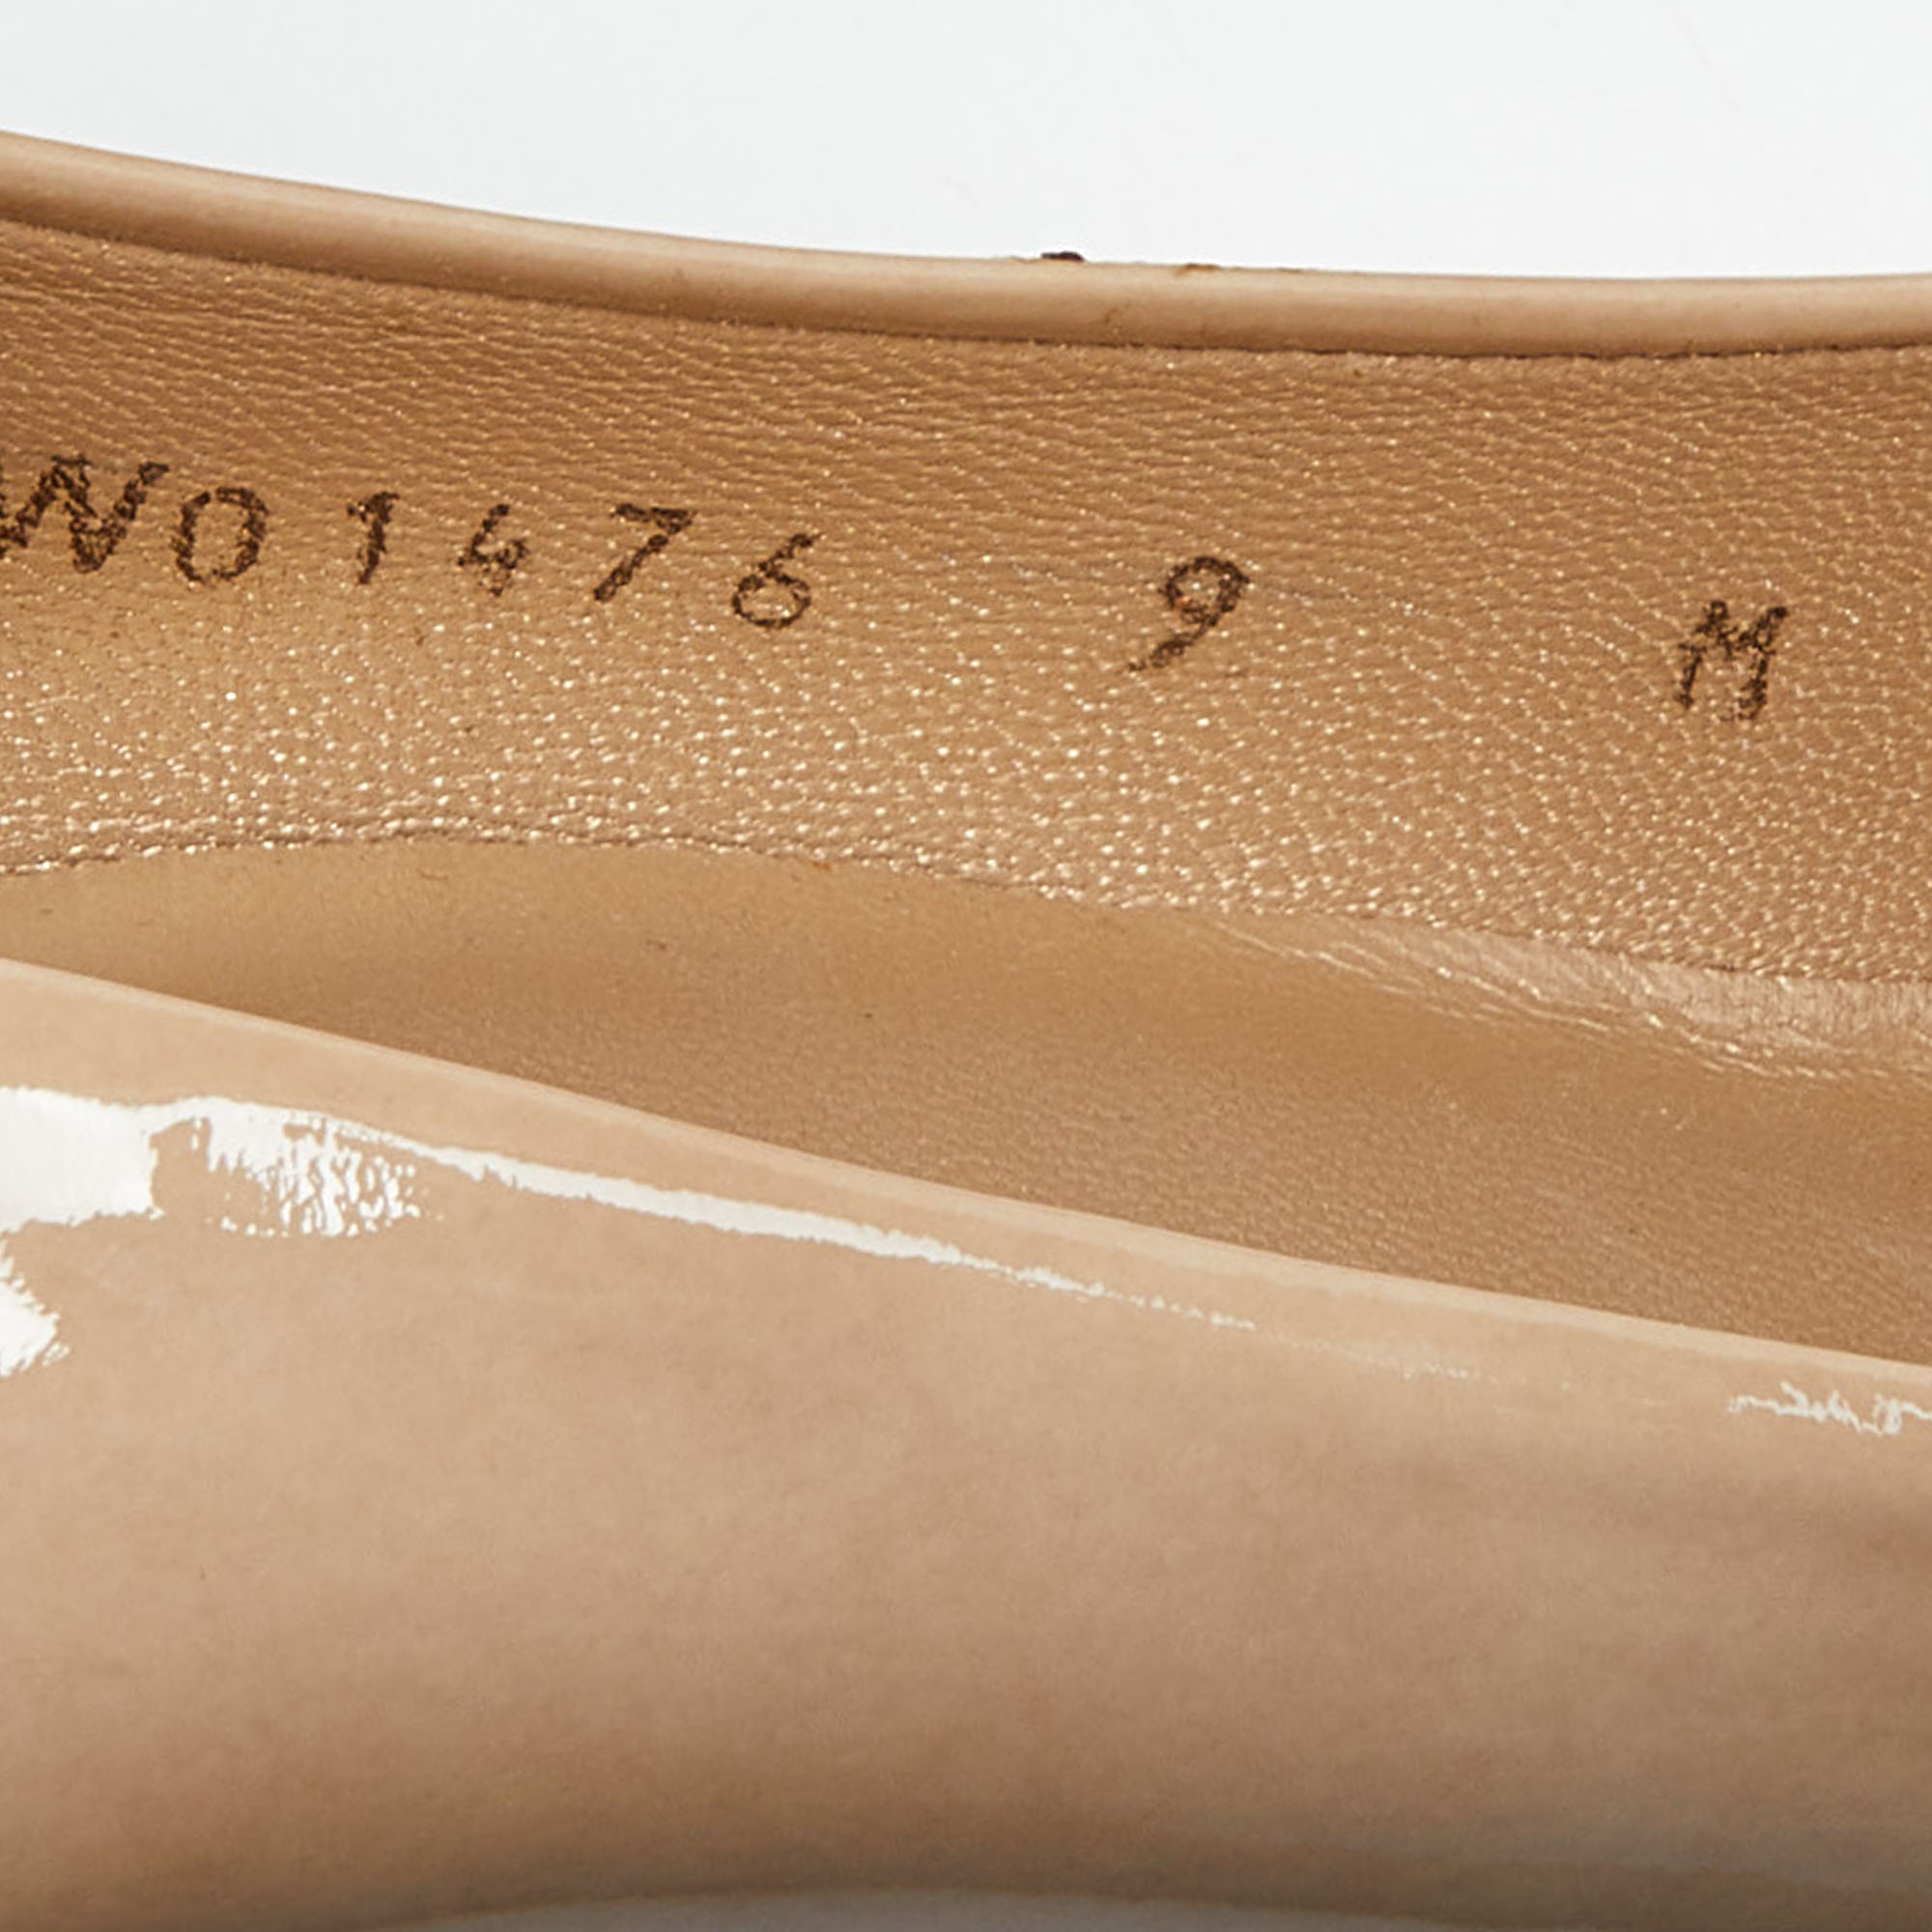 Stuart Weitzman Beige Patent Leather Peep Toe Platform Pumps Size 39.5